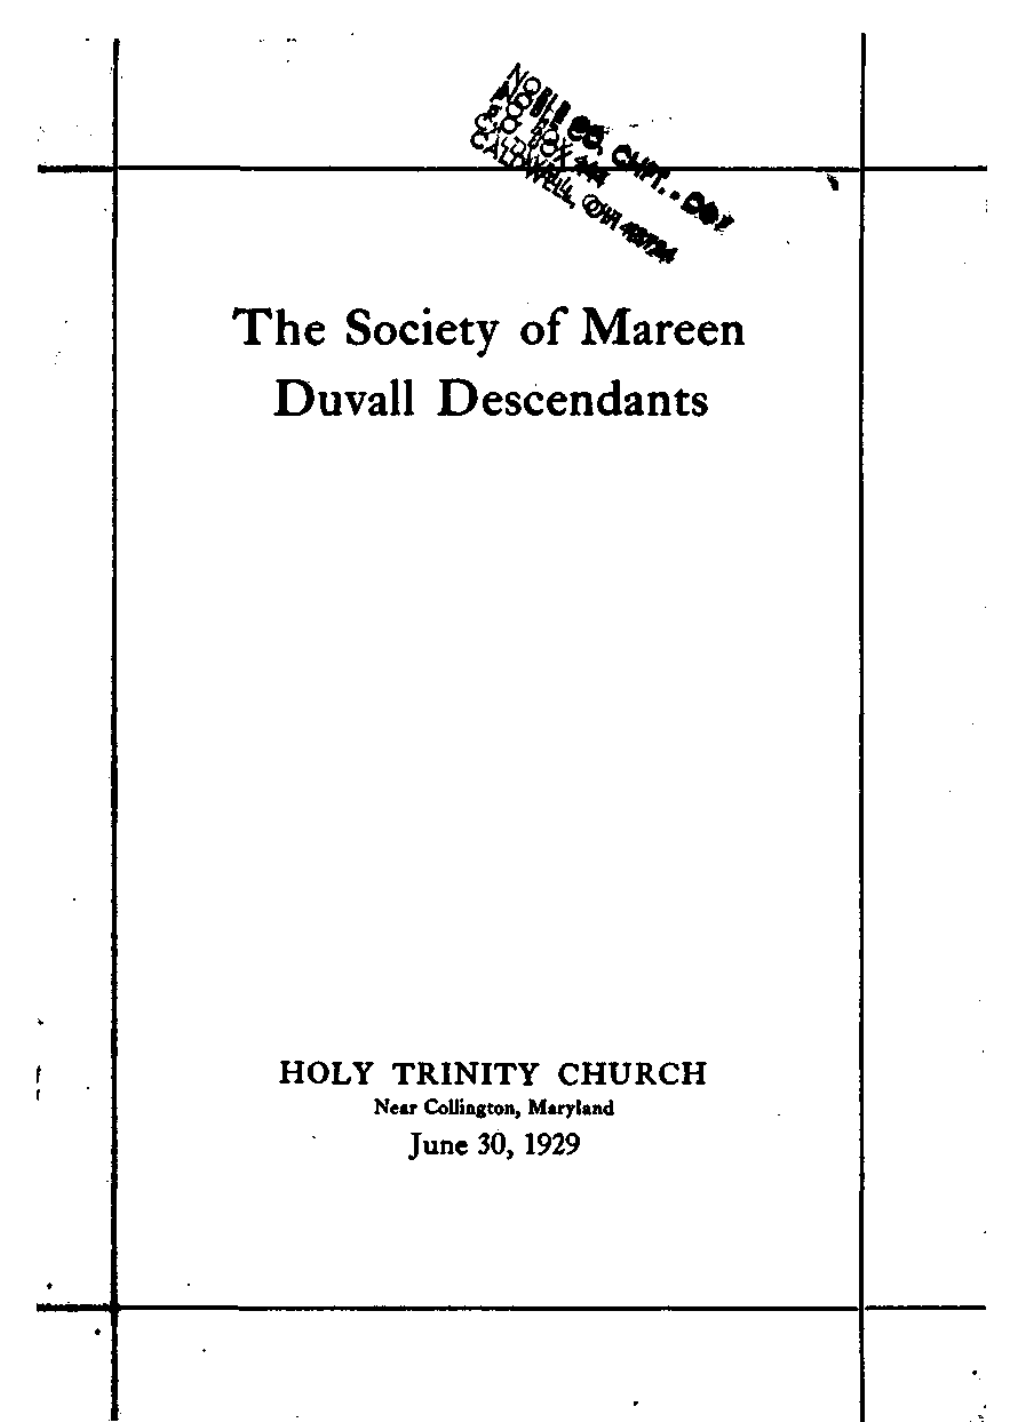 The Society of Mareen Duvall Descendants